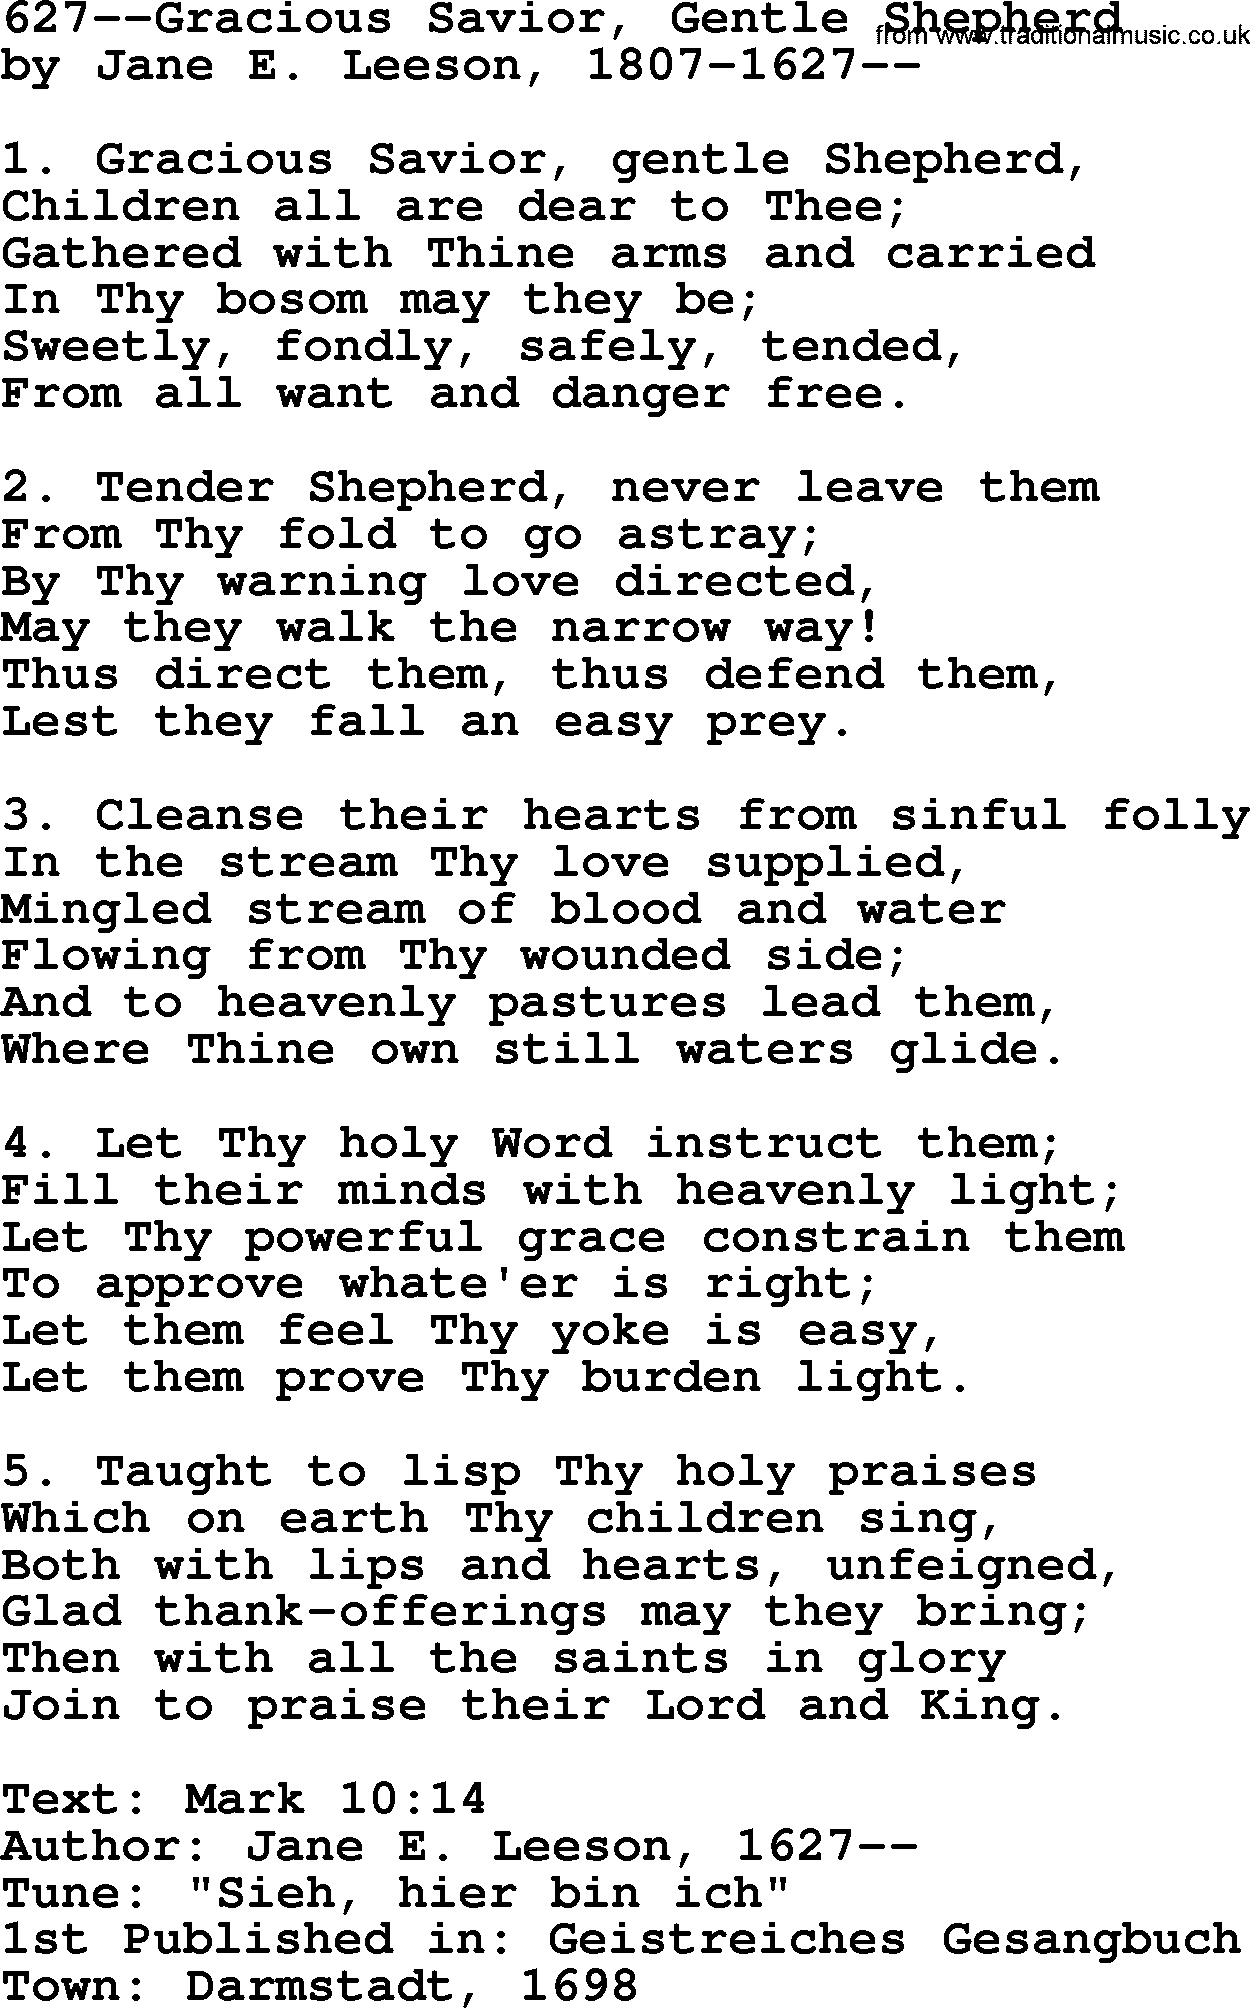 Lutheran Hymn: 627--Gracious Savior, Gentle Shepherd.txt lyrics with PDF